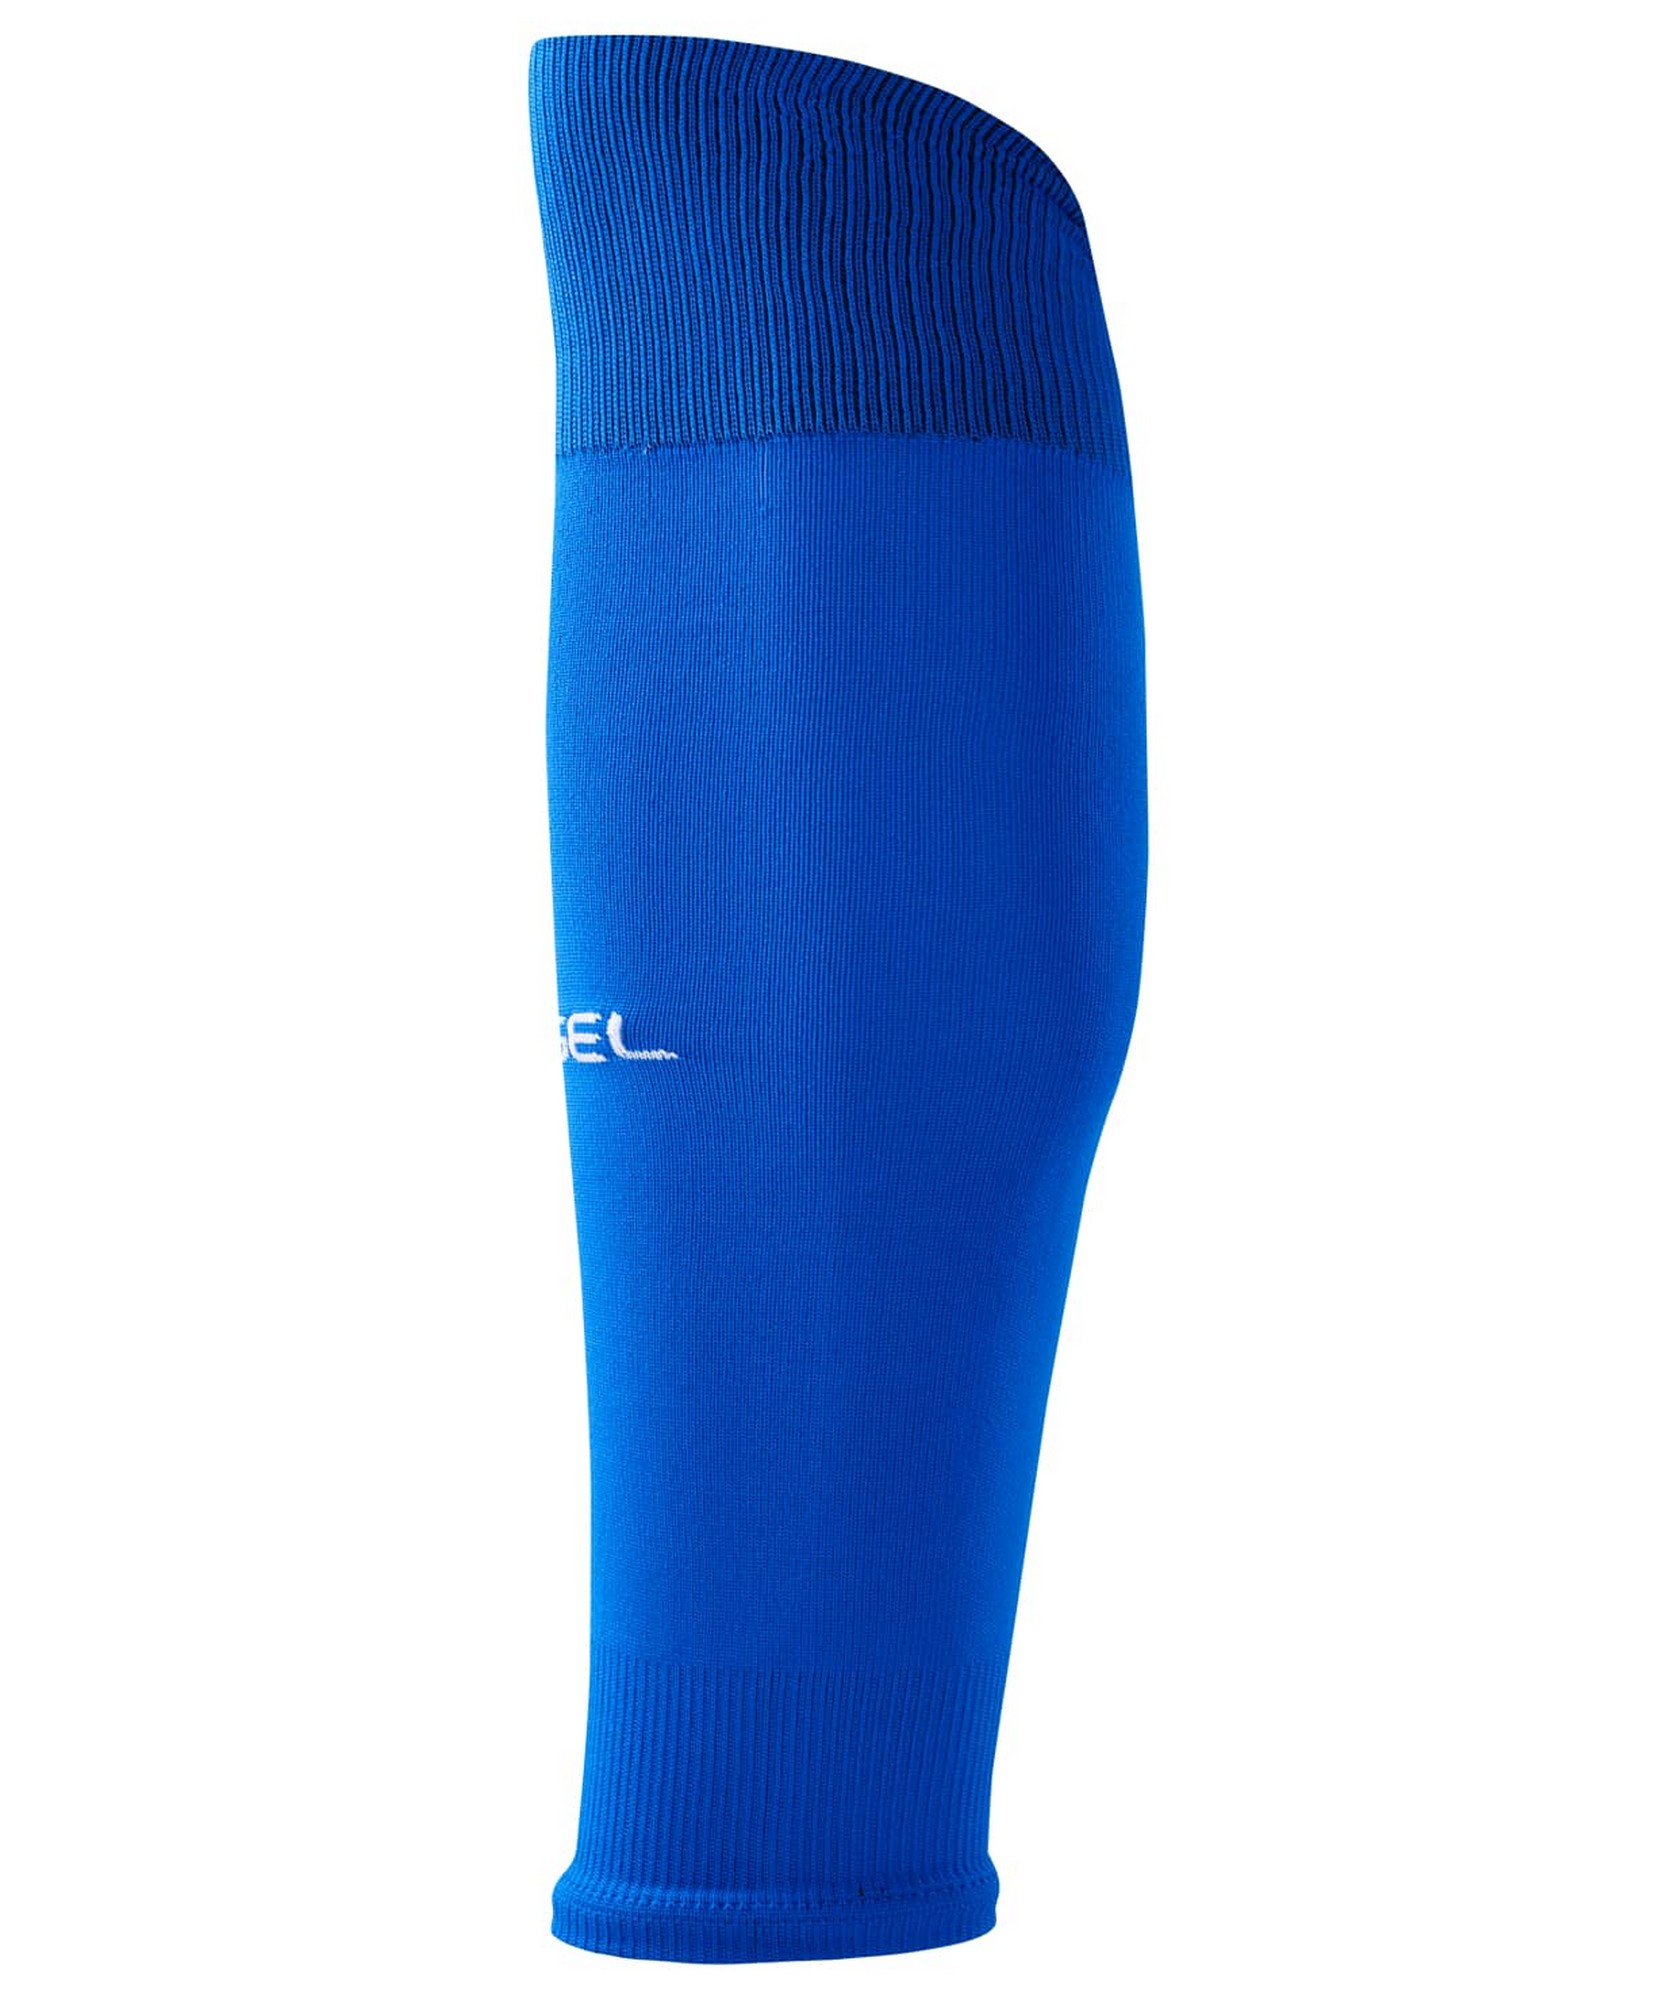 Гетры футбольные Jogel Camp Basic Sleeve Socks, синий\белый 1663_2000